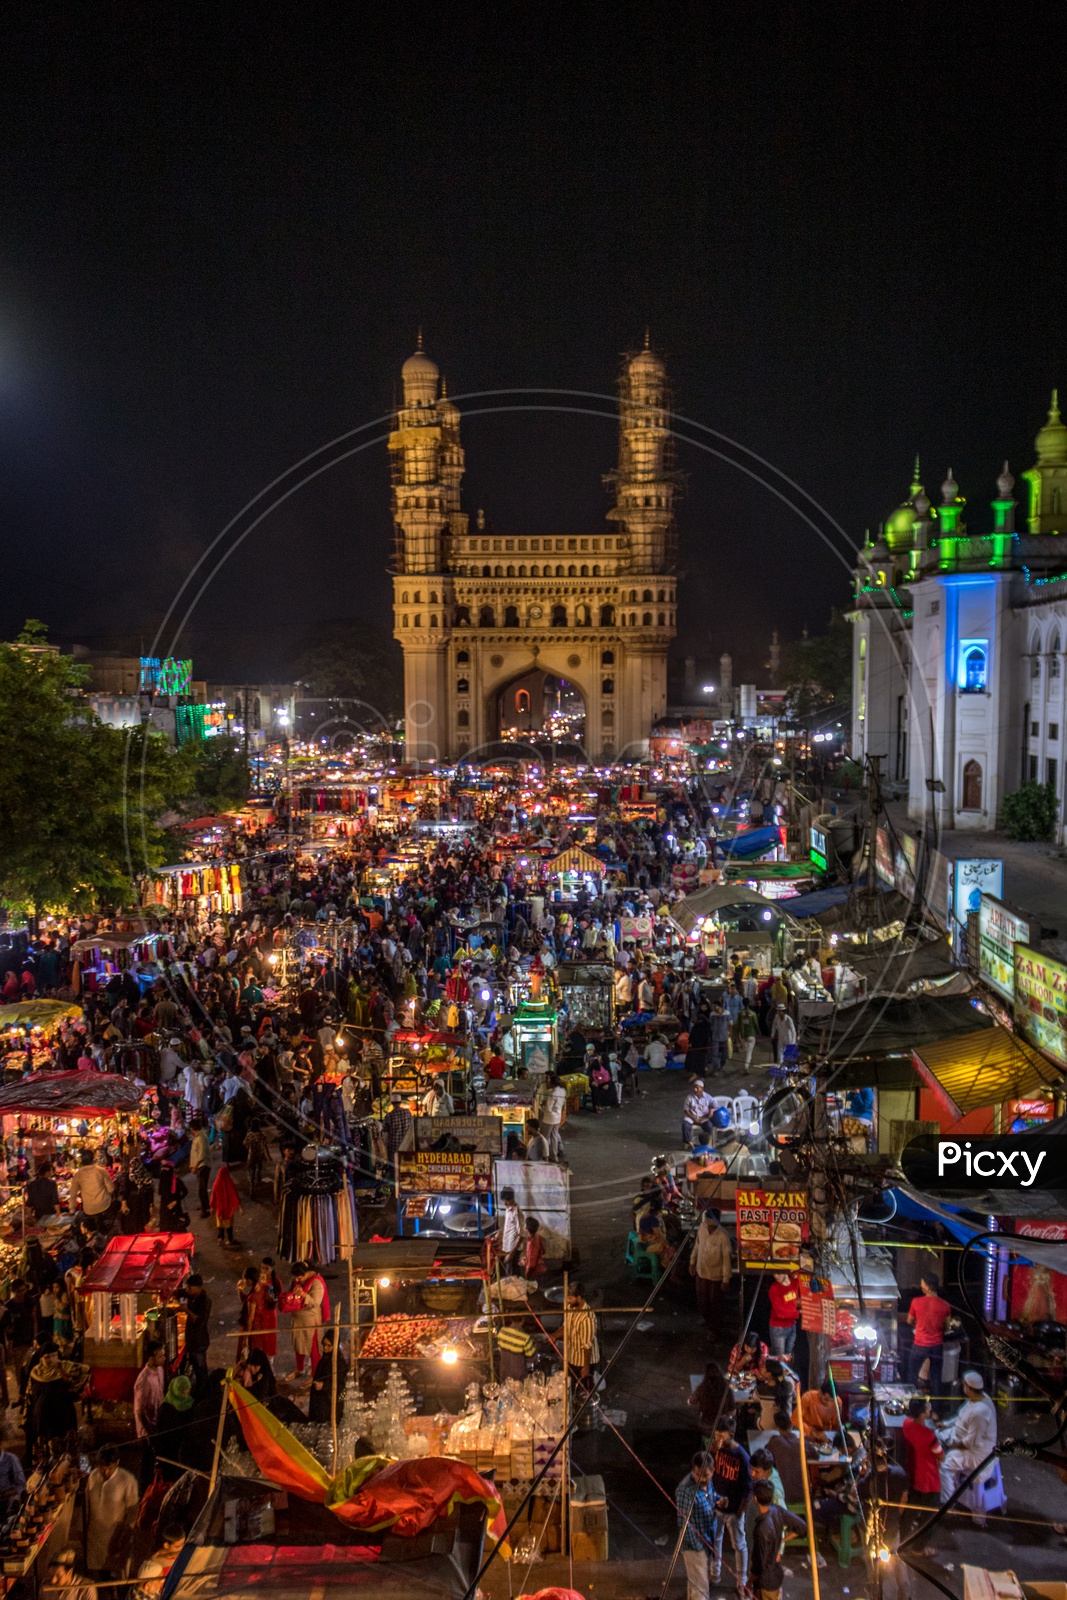 ramdan nights of charminar with street markets and colourfull night lights